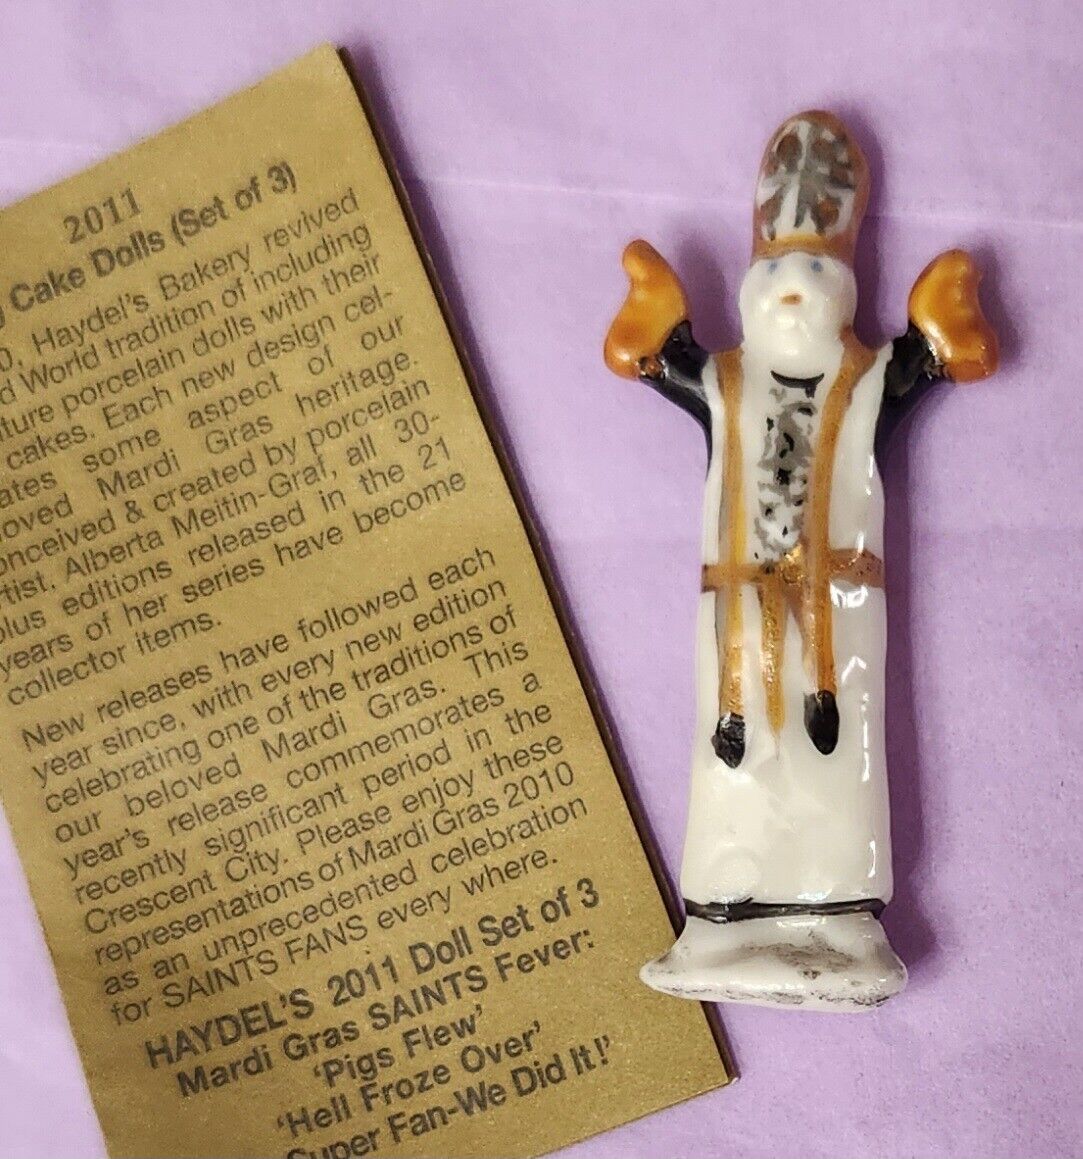 2011 Haydels Mardi Gras king cake doll Da Pope Superfan NOLA Saints Artist Proof